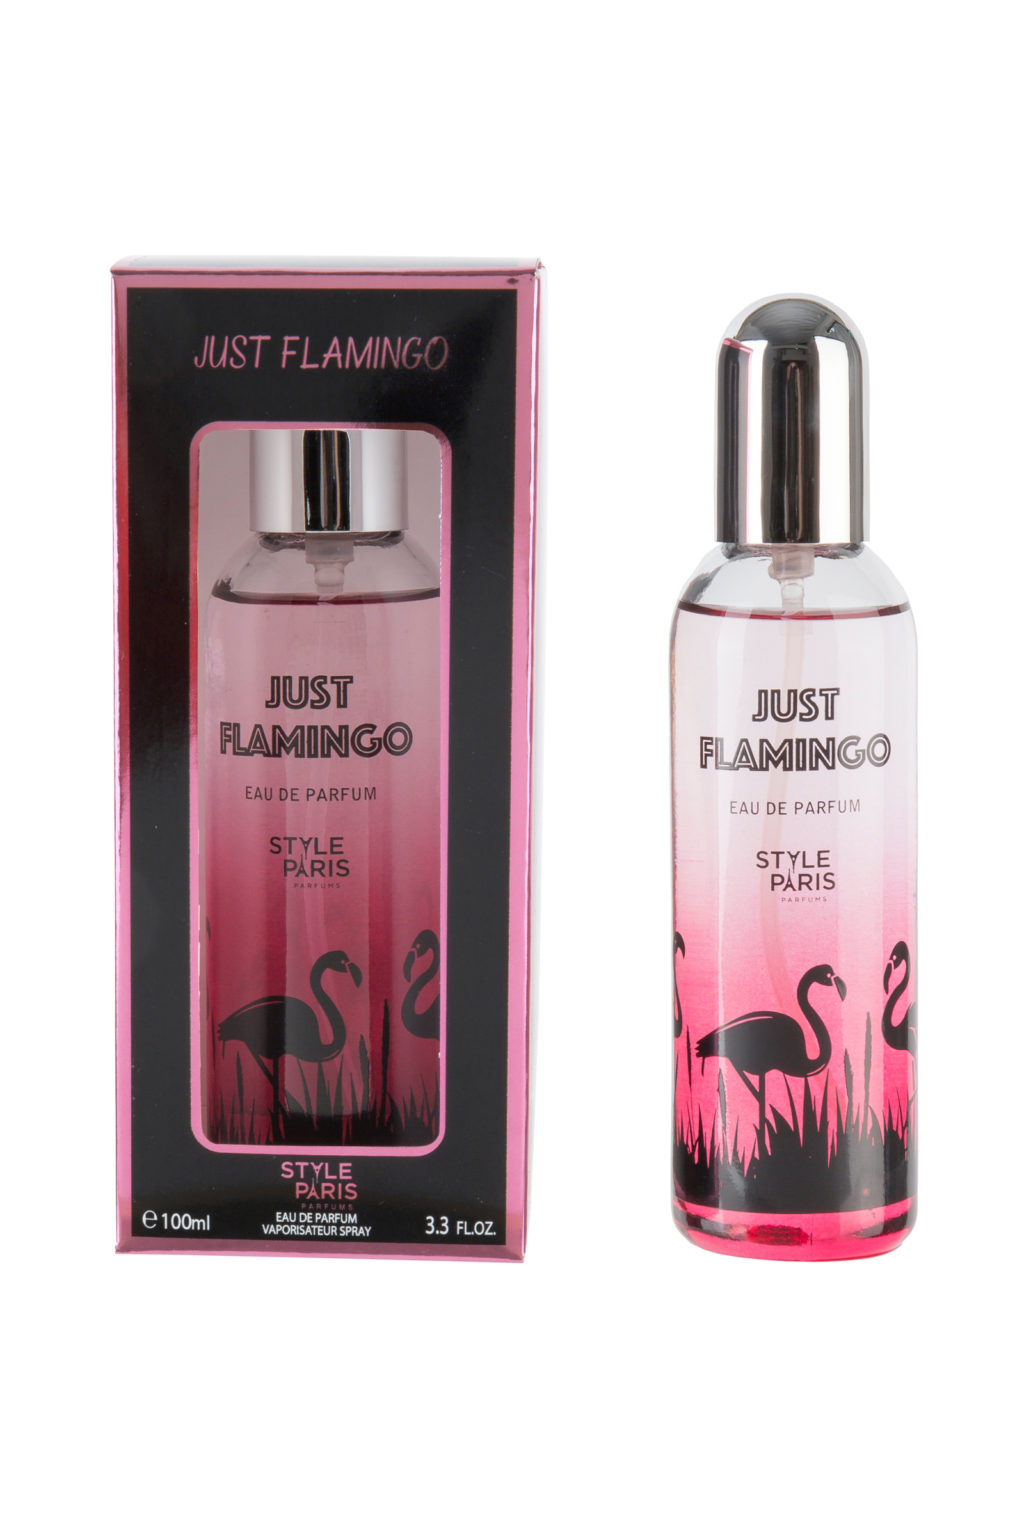 Just Flamingo - Paris Perfumes Inc - USA Fragrance Distributors Since 1979